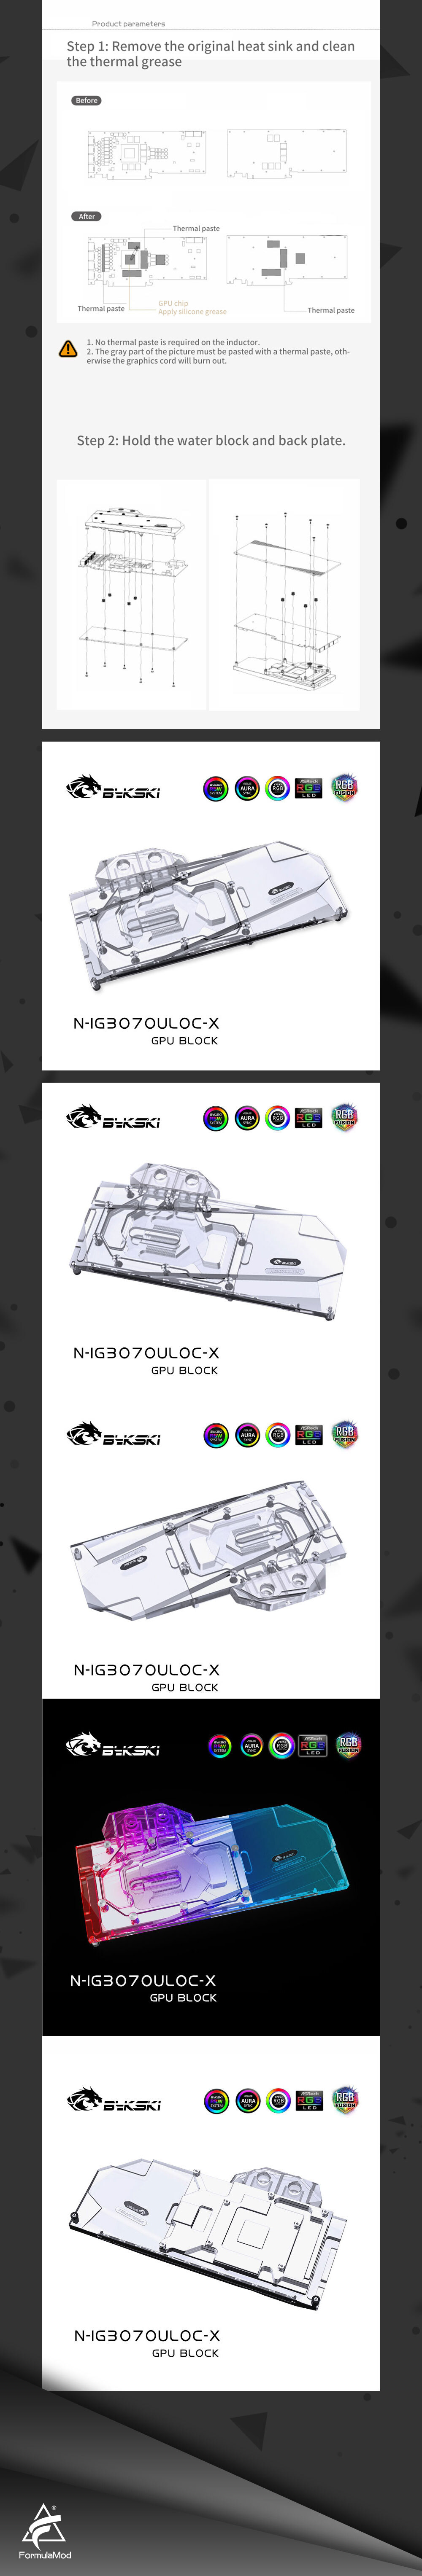 Bykski 3070 GPU Water Cooling Block For Colorful iGame RTX3070 Advanced / Ultra , Graphics Card Liquid Cooler, N-IG3070ULOC-X  